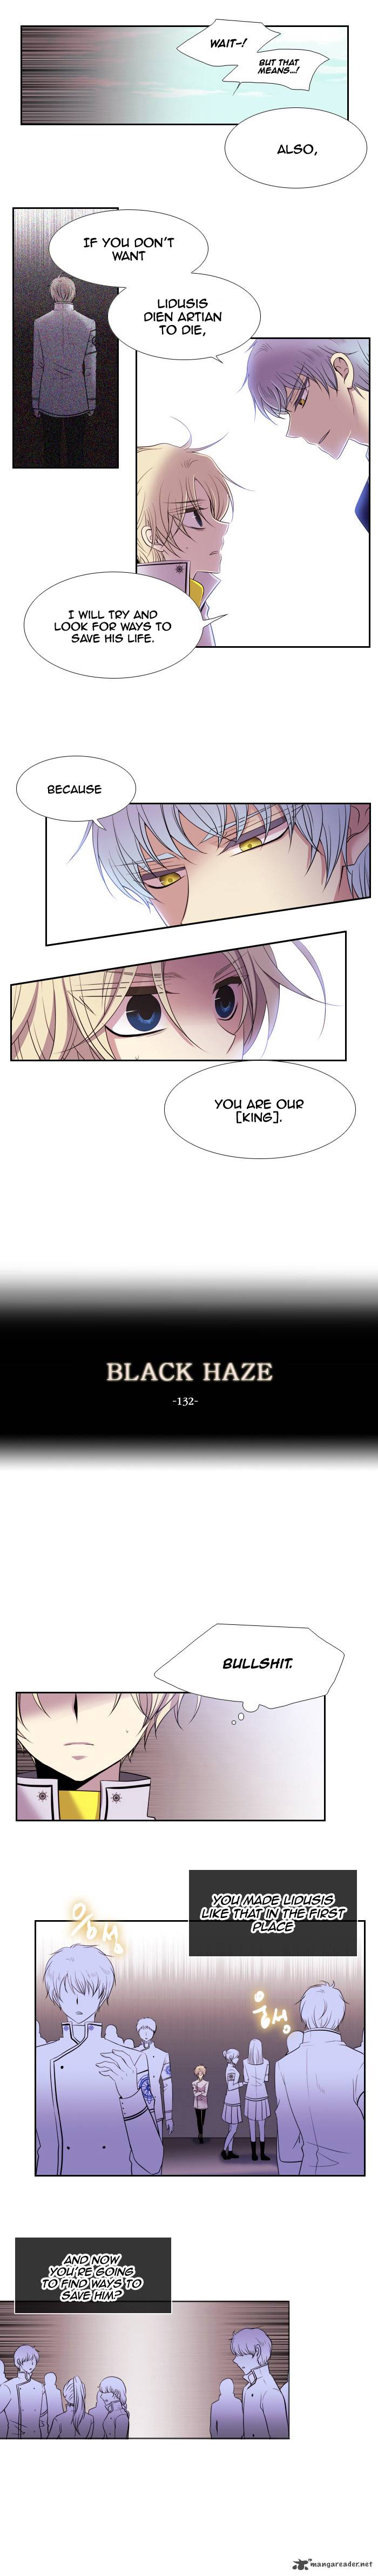 Black Haze Chapter 132 Page 3